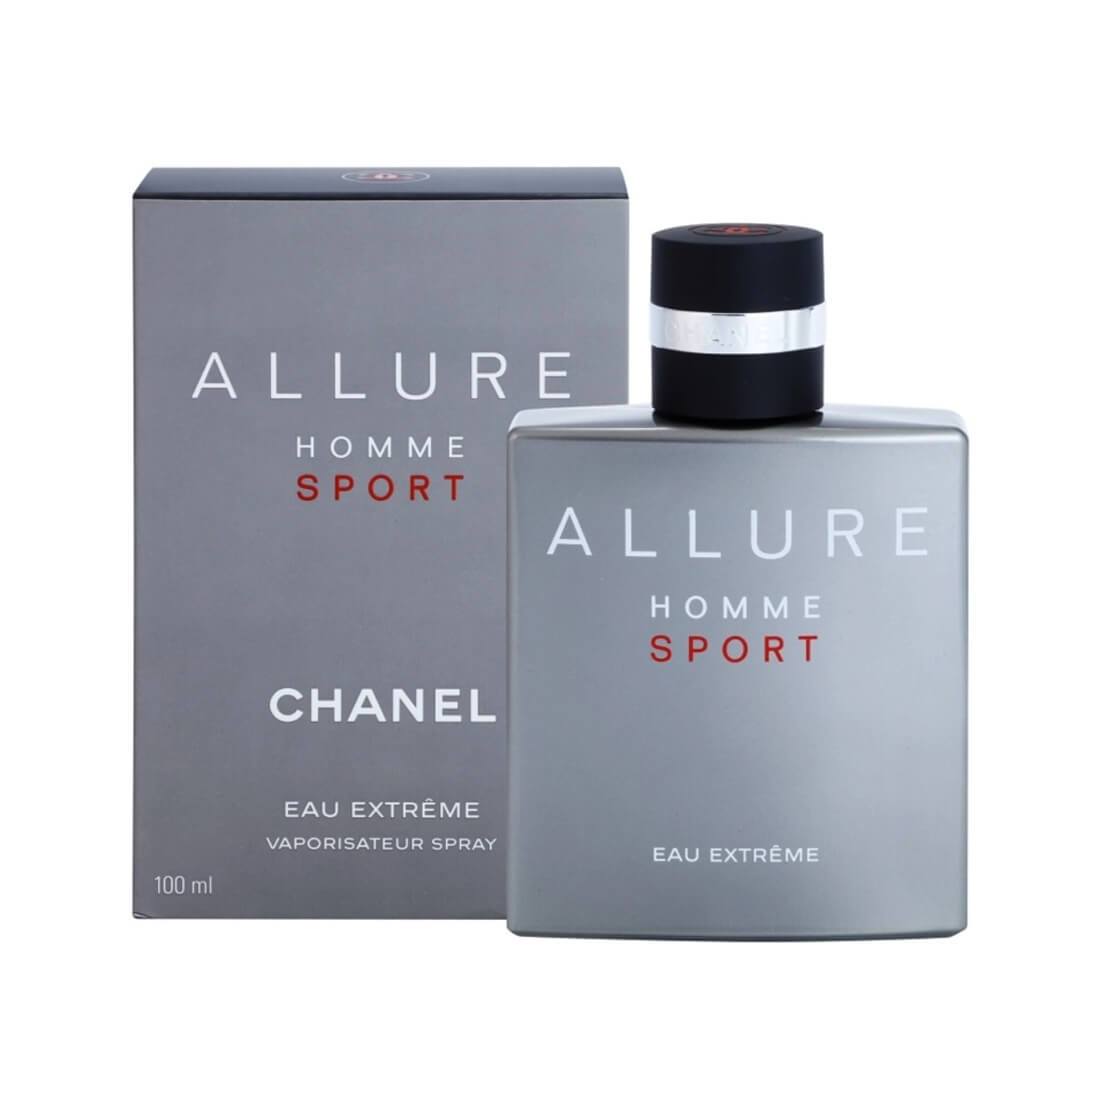 Туалетная вода chanel allure homme sport. Шанель Аллюр Хомме спорт. Chanel Allure homme Sport Eau extreme. Chanel Allure homme Sport 100ml Парфюм. Allure homme Sport туалетная вода 100 мл.